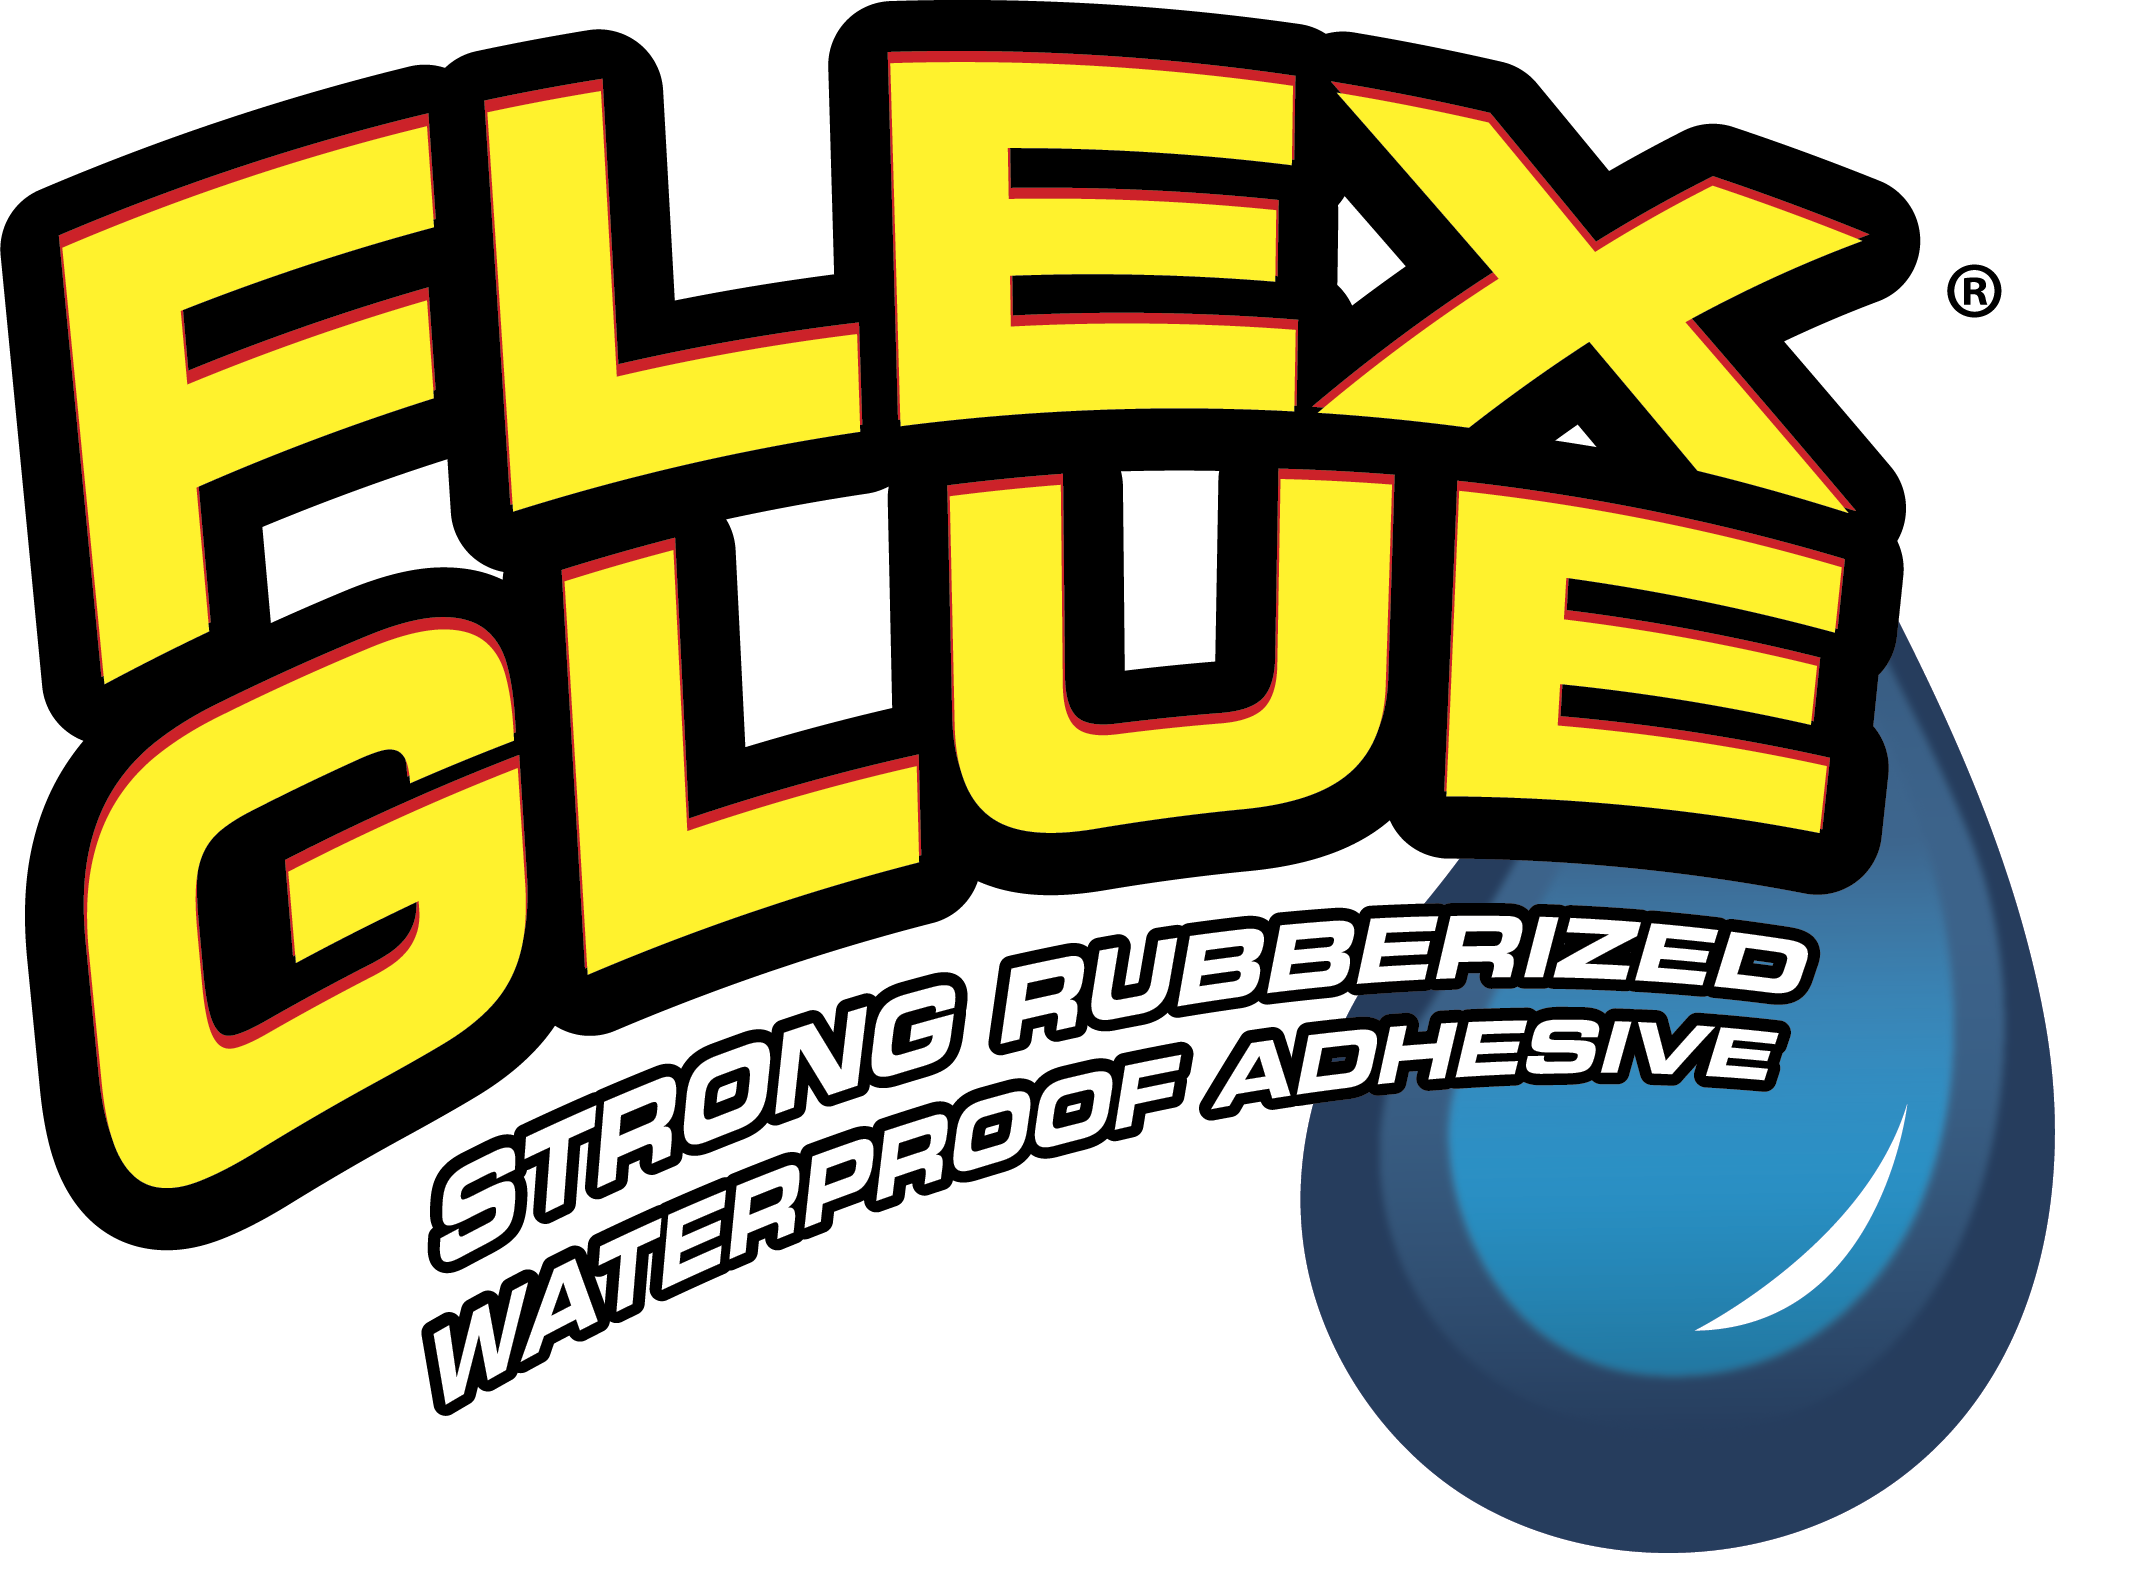 Flex Seal Logo